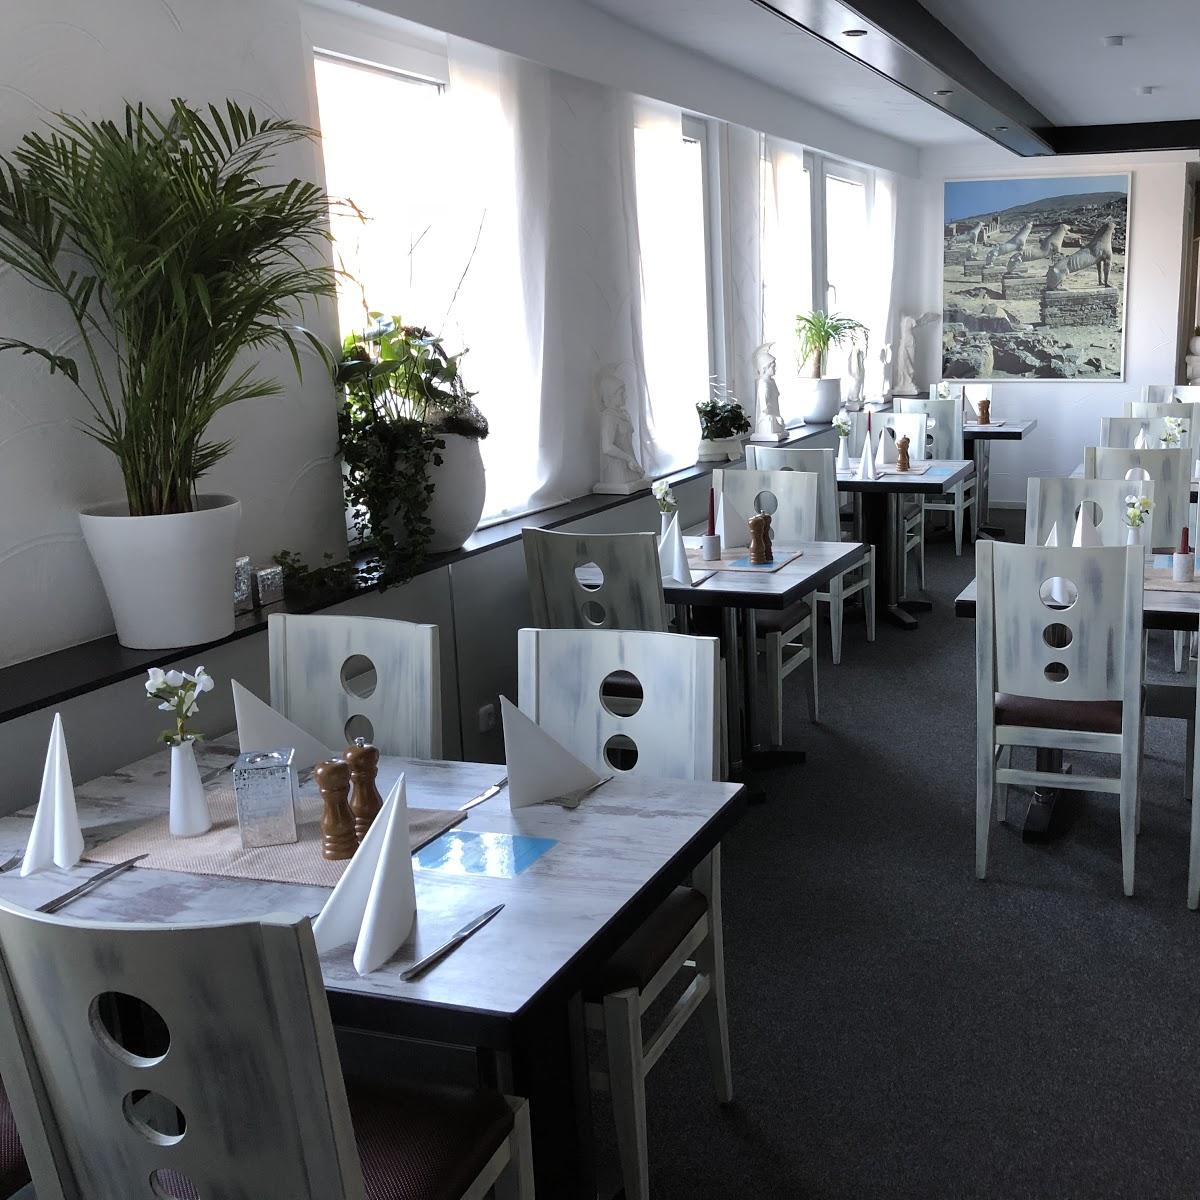 Restaurant "Der Grieche" in  Oelde